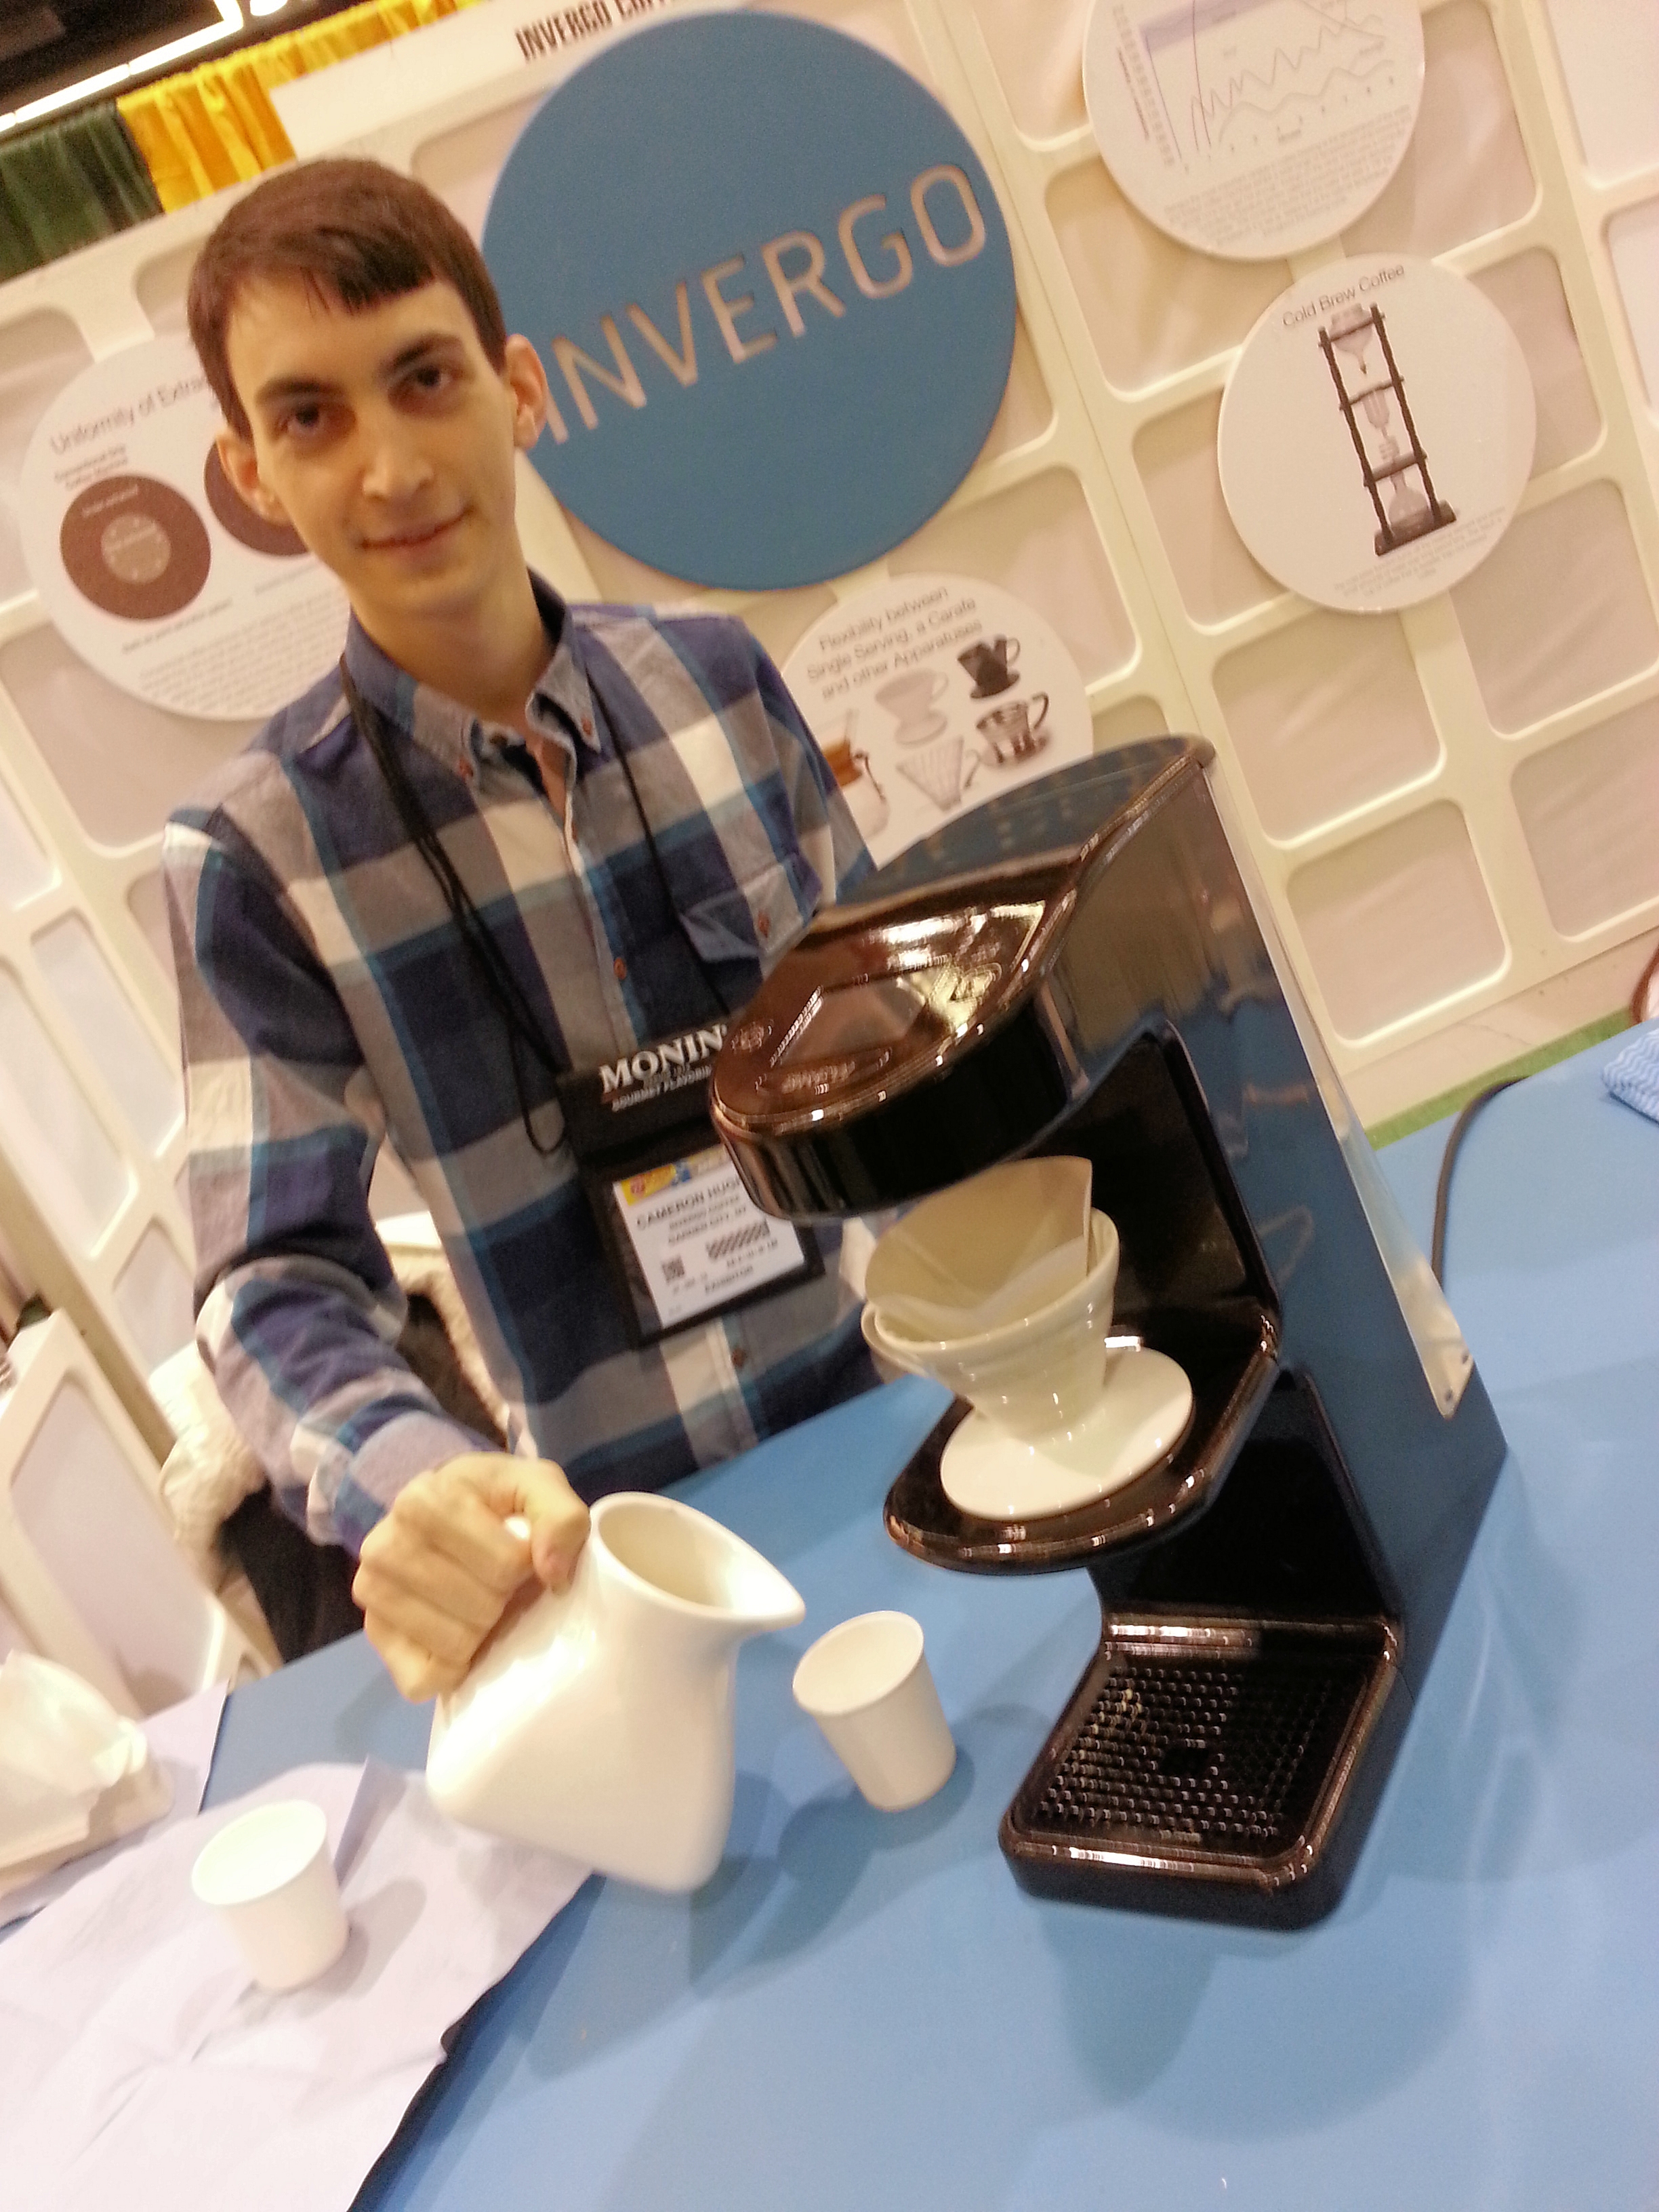 MELITTA 1 CUP BREWING CONE – McLaughlin Coffee Roasting Company